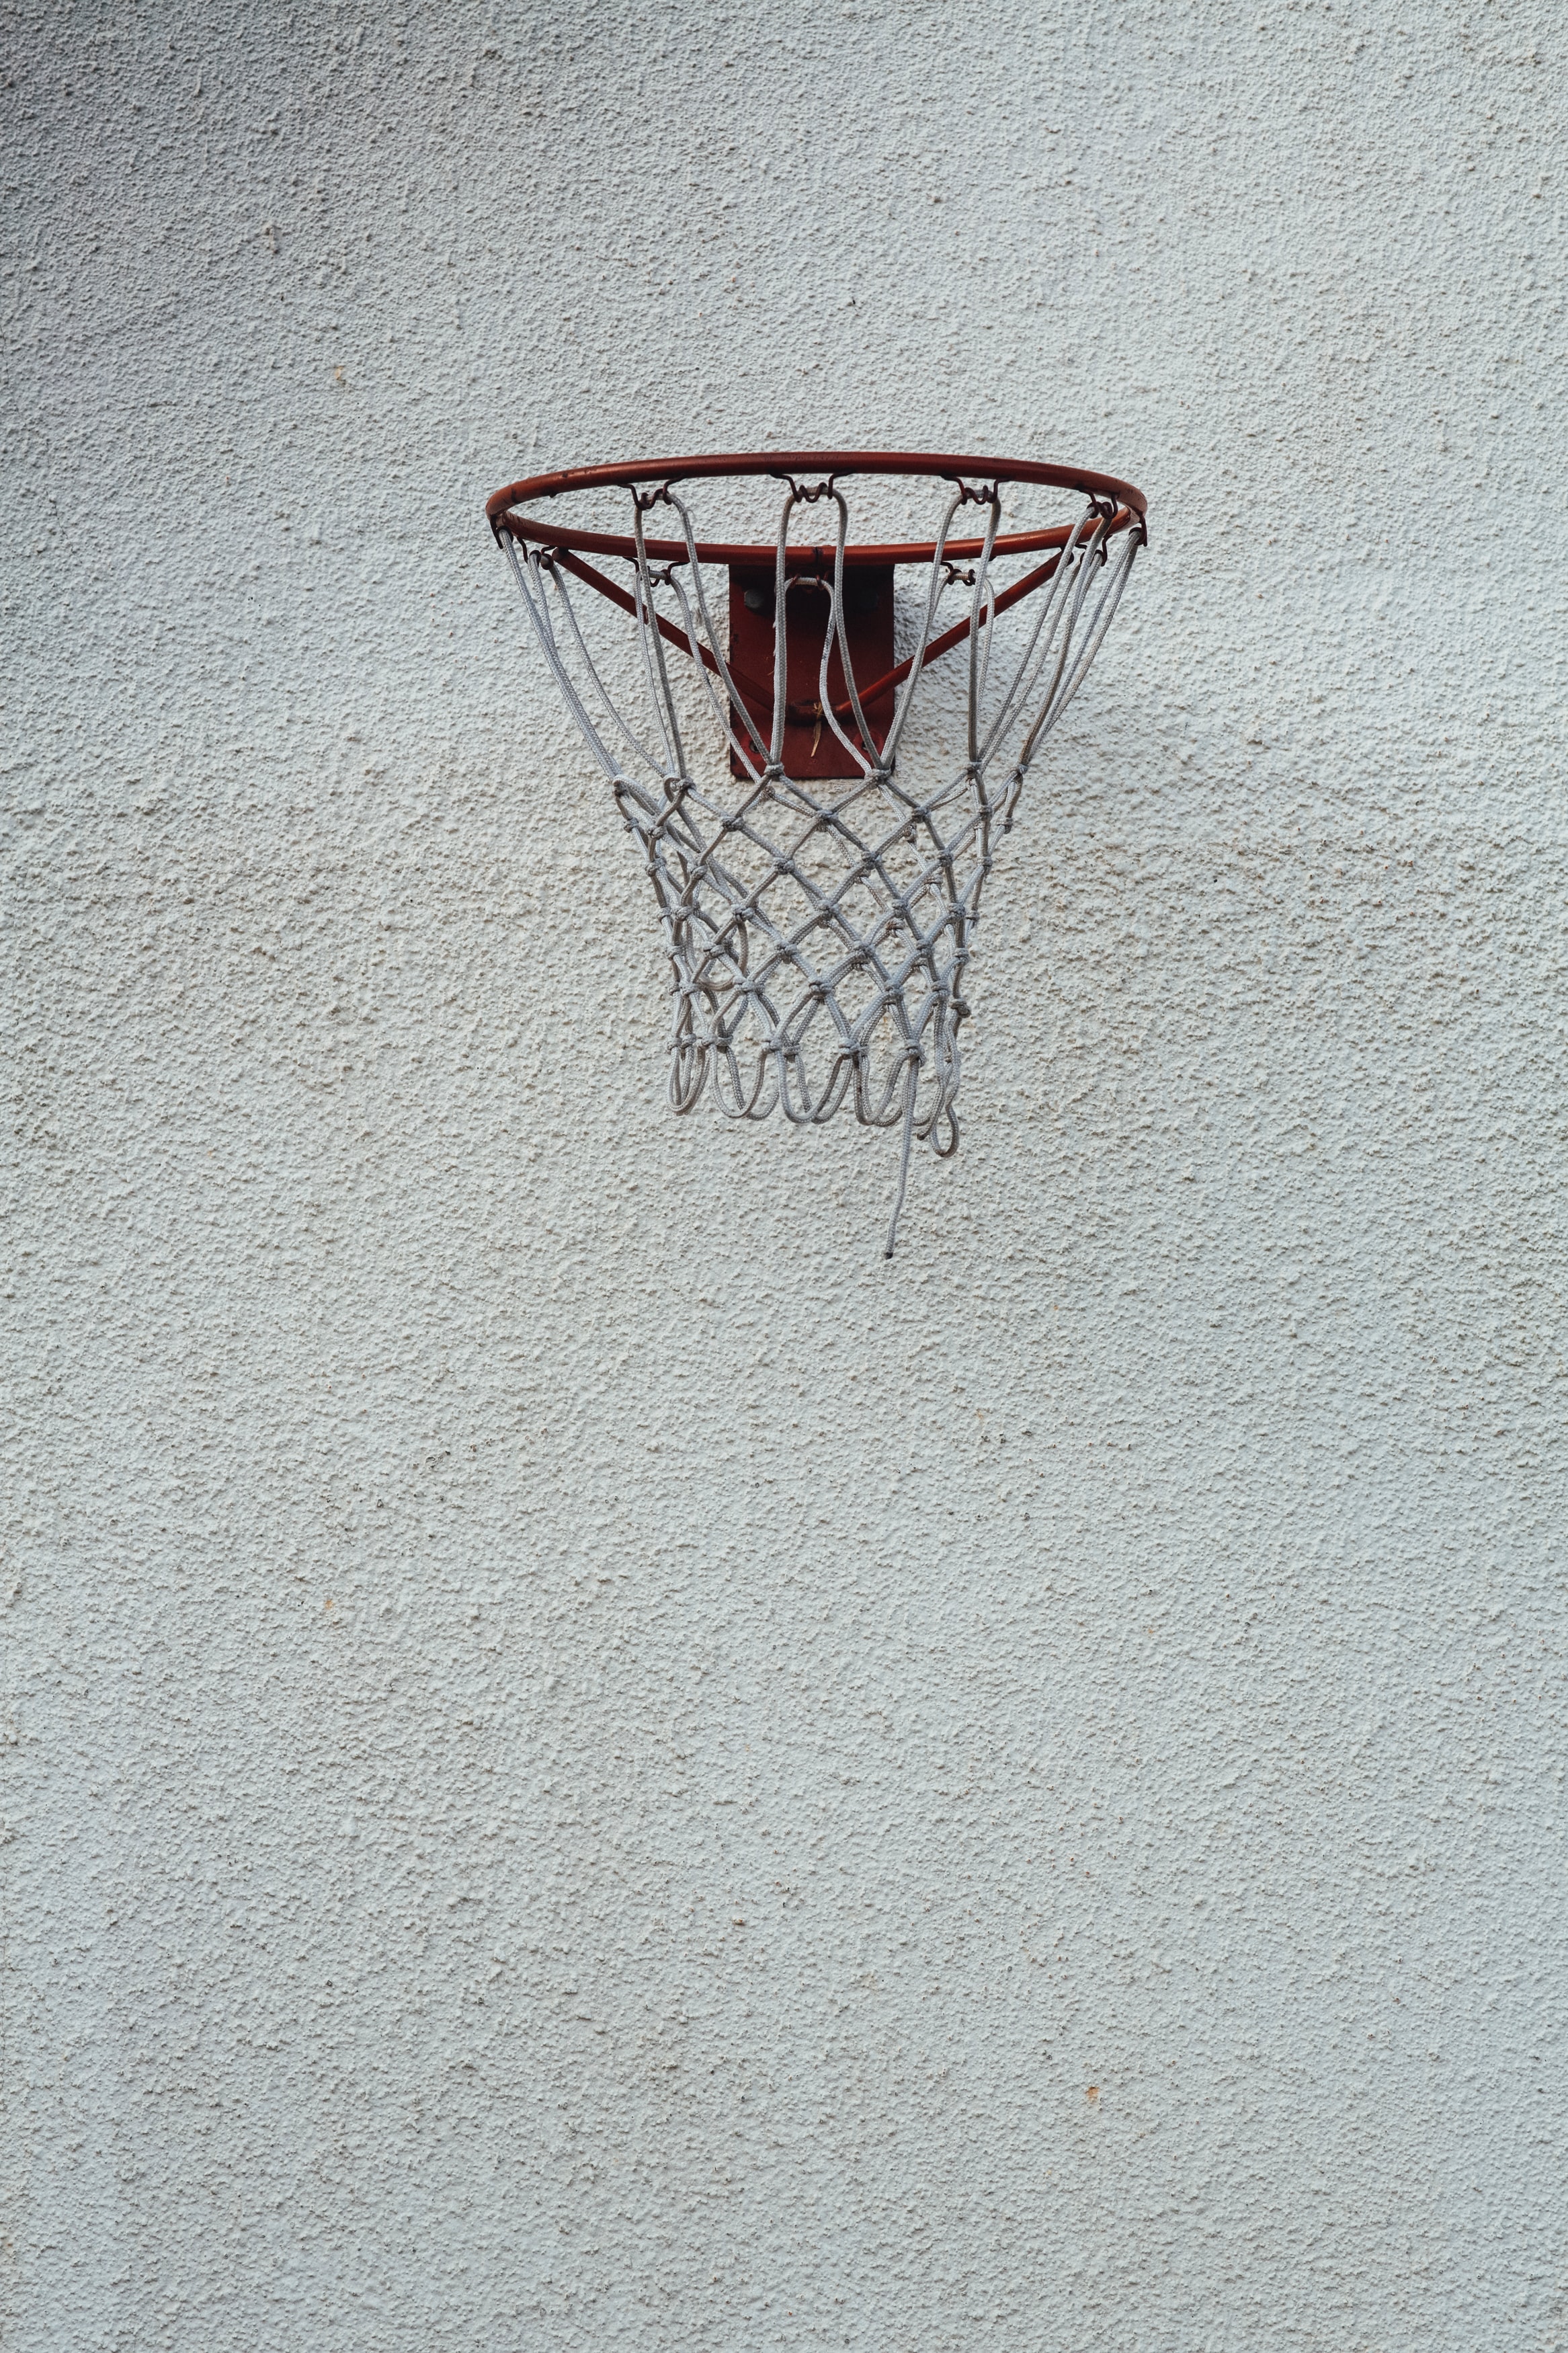 Mobile wallpaper basketball, basketball hoop, basketball ring, miscellanea, miscellaneous, grid, wall